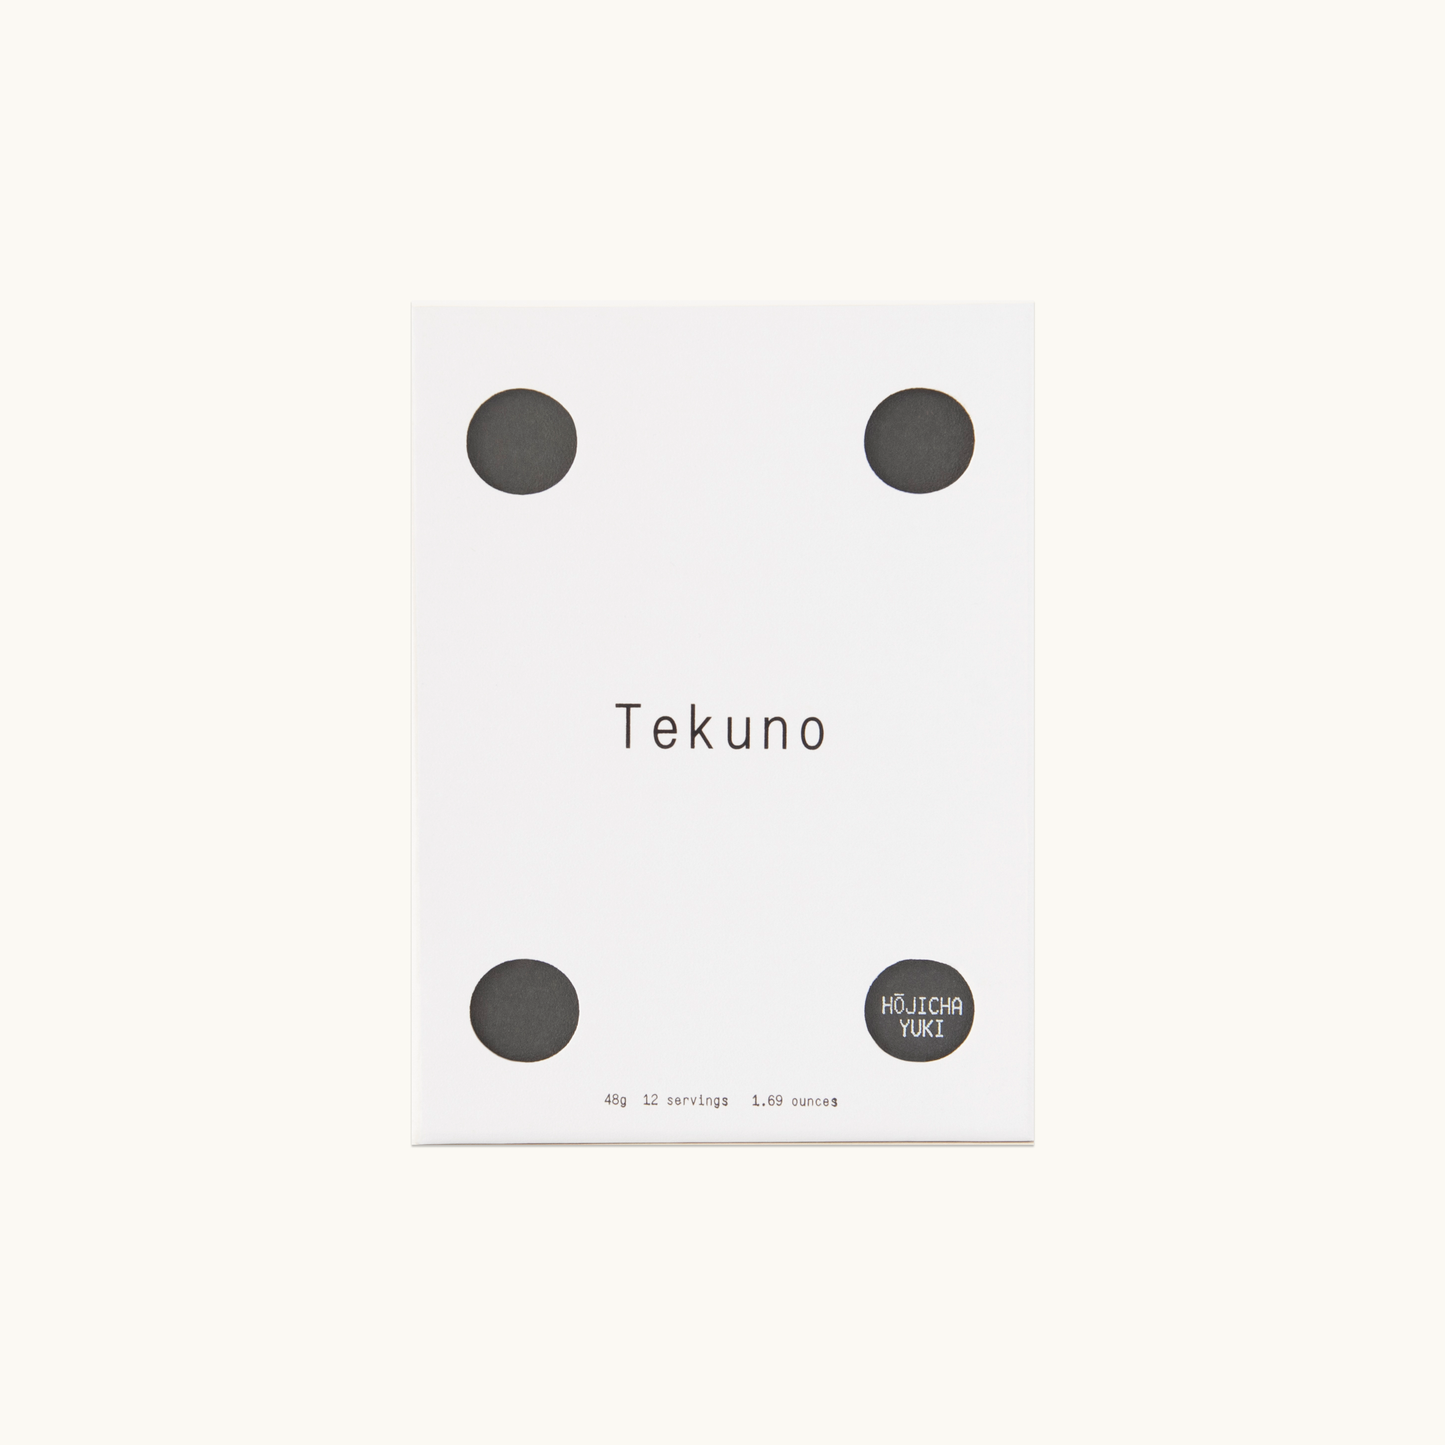 Tekuno - Hōjicha, Yuki Tea Sachets - Case of 10